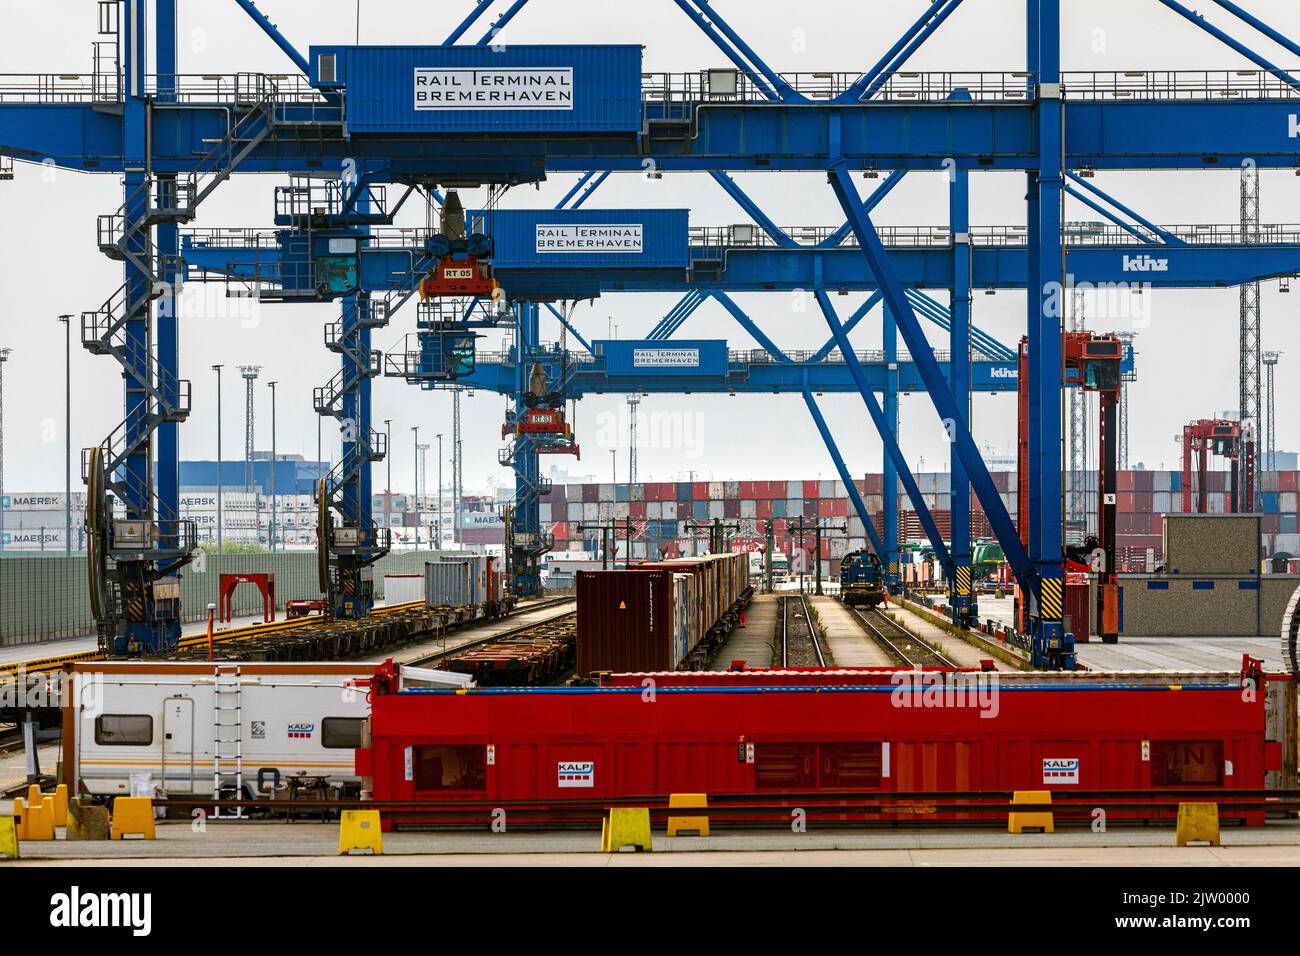 Rail Terminal Bremerhaven (RTB) in Containerterminal IV Stock Photo